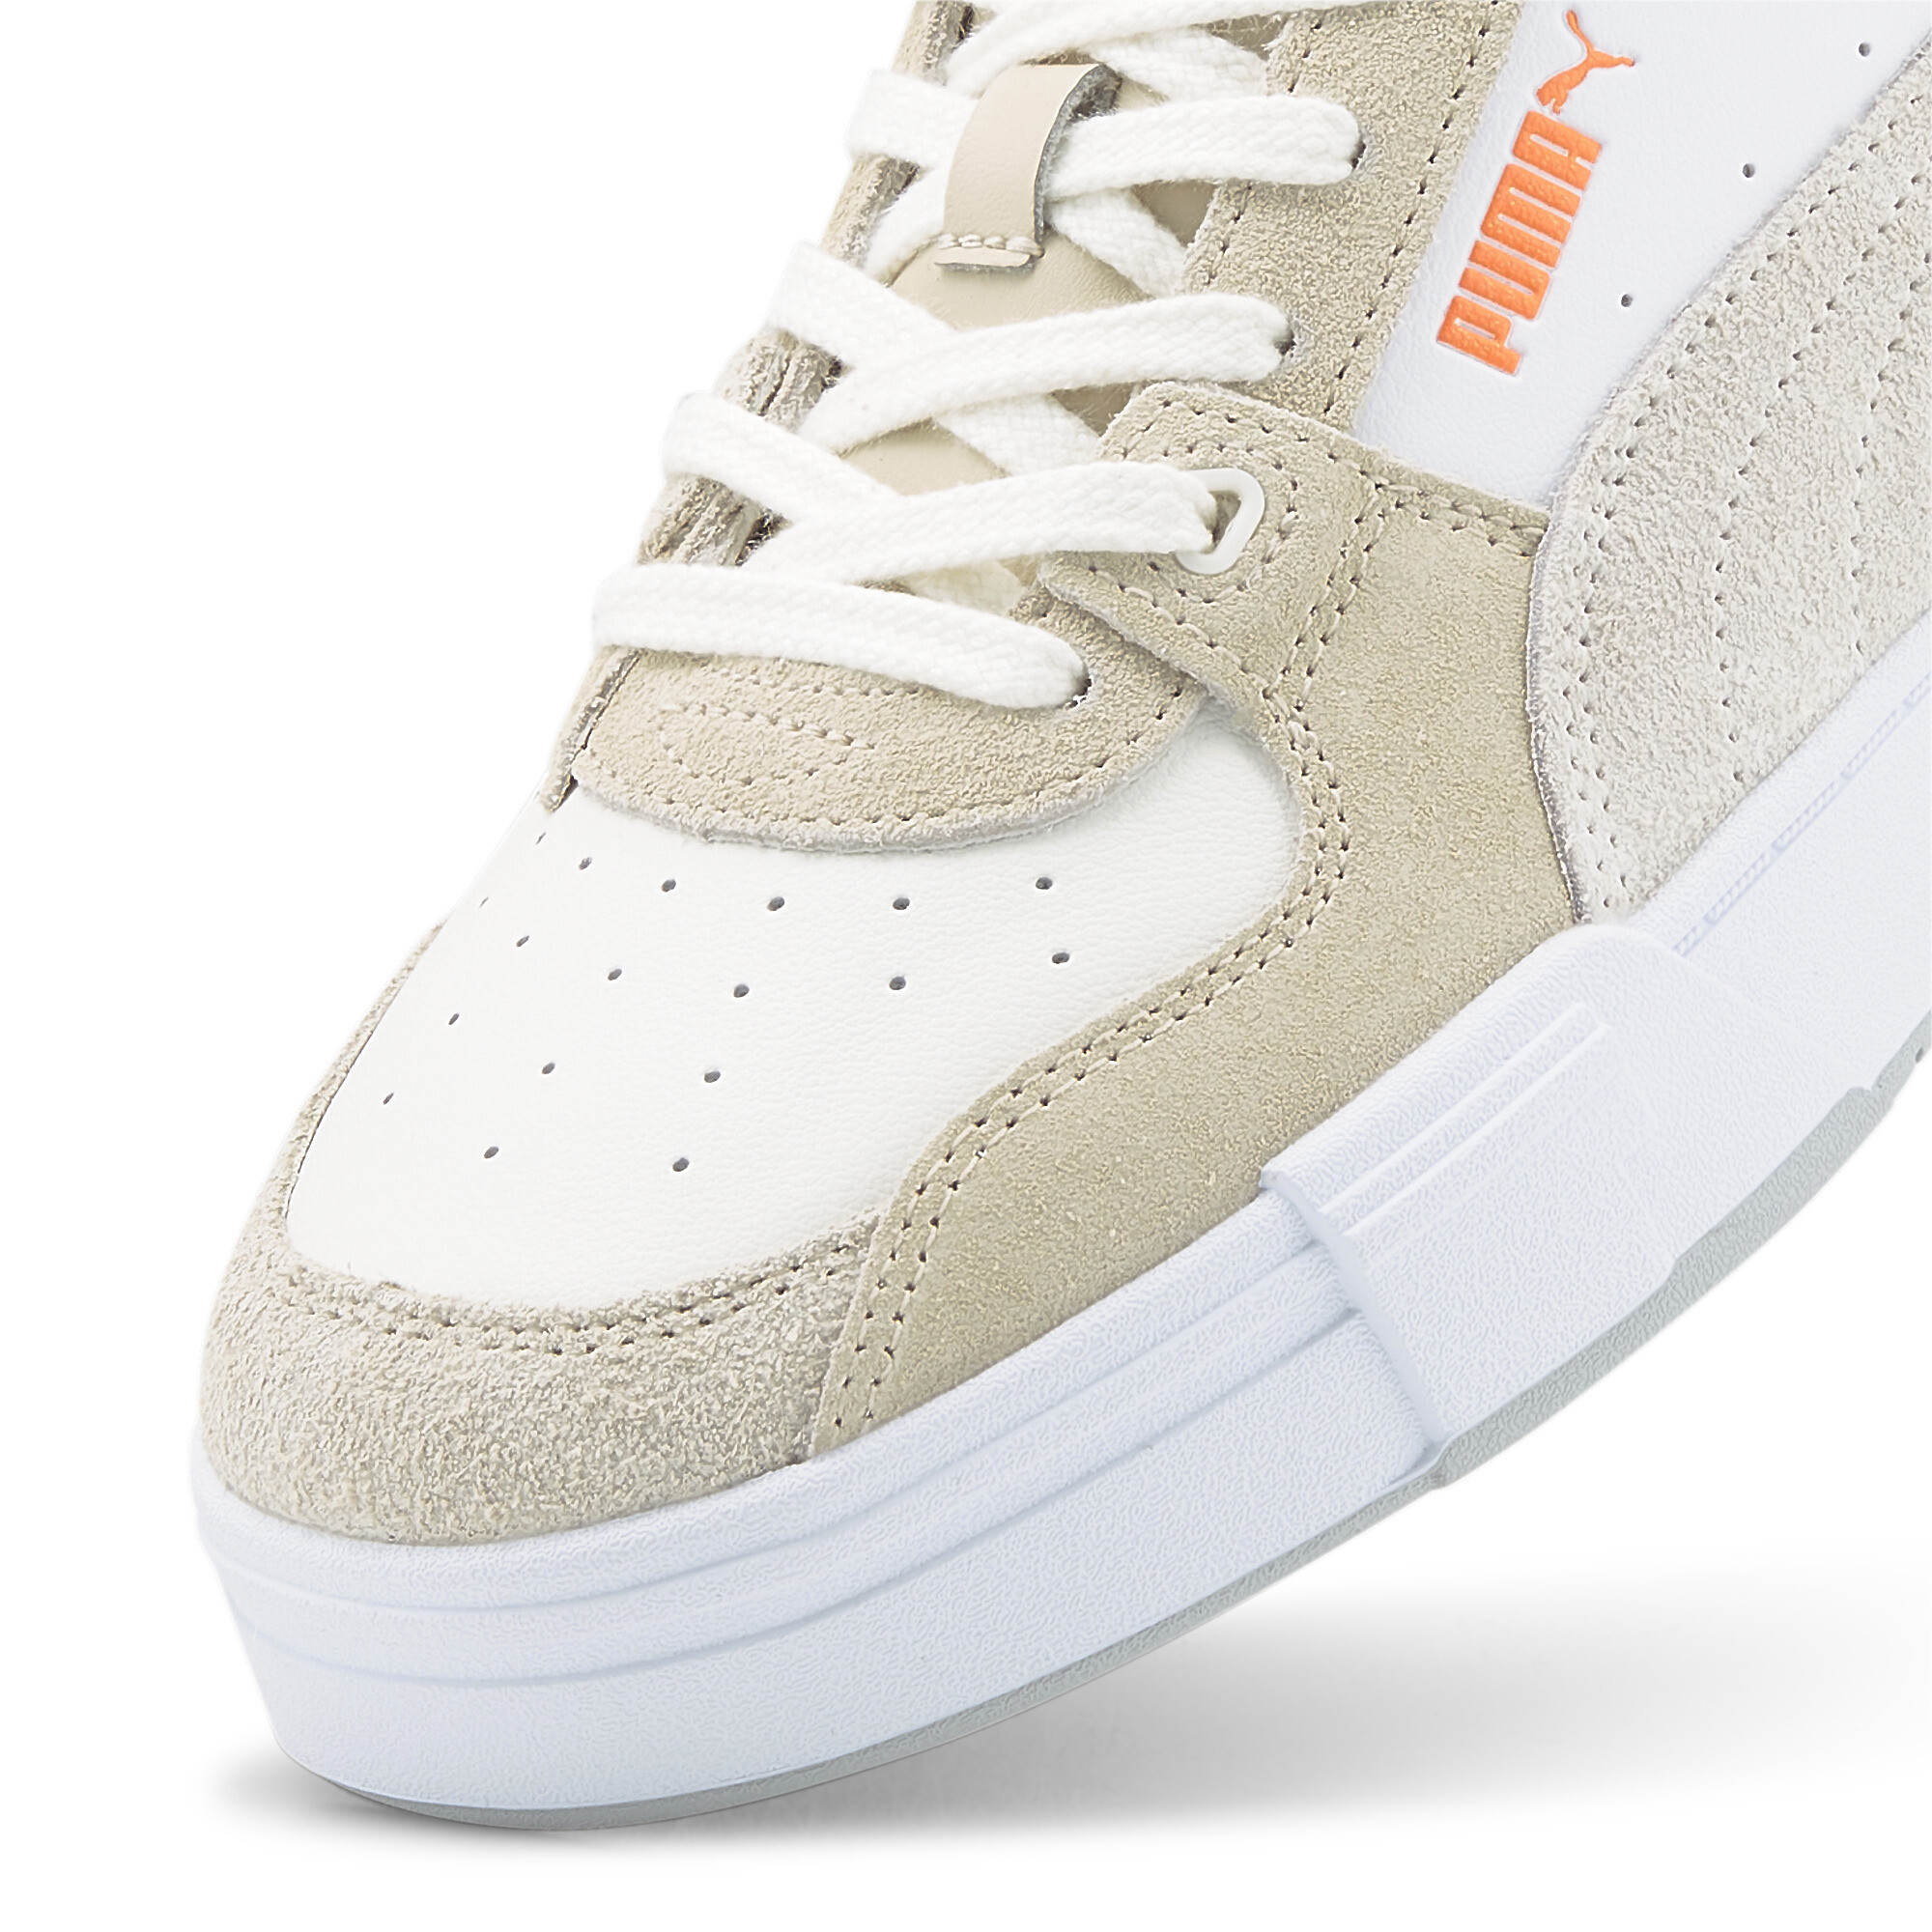 Men's Puma CA Pro Glitch Suede Sneakers, White, Size 43, Shoes